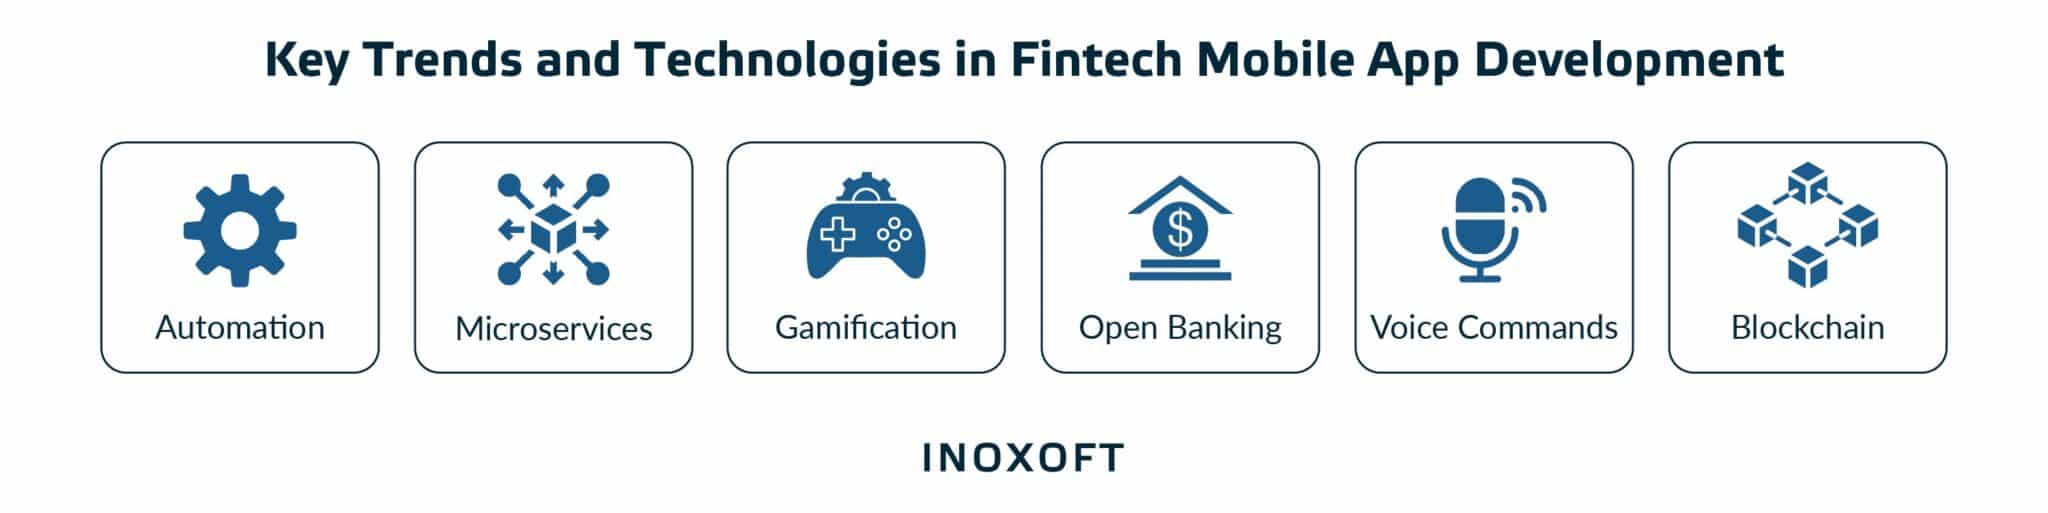 Key Trends and Technologies in Fintech Mobile App Development